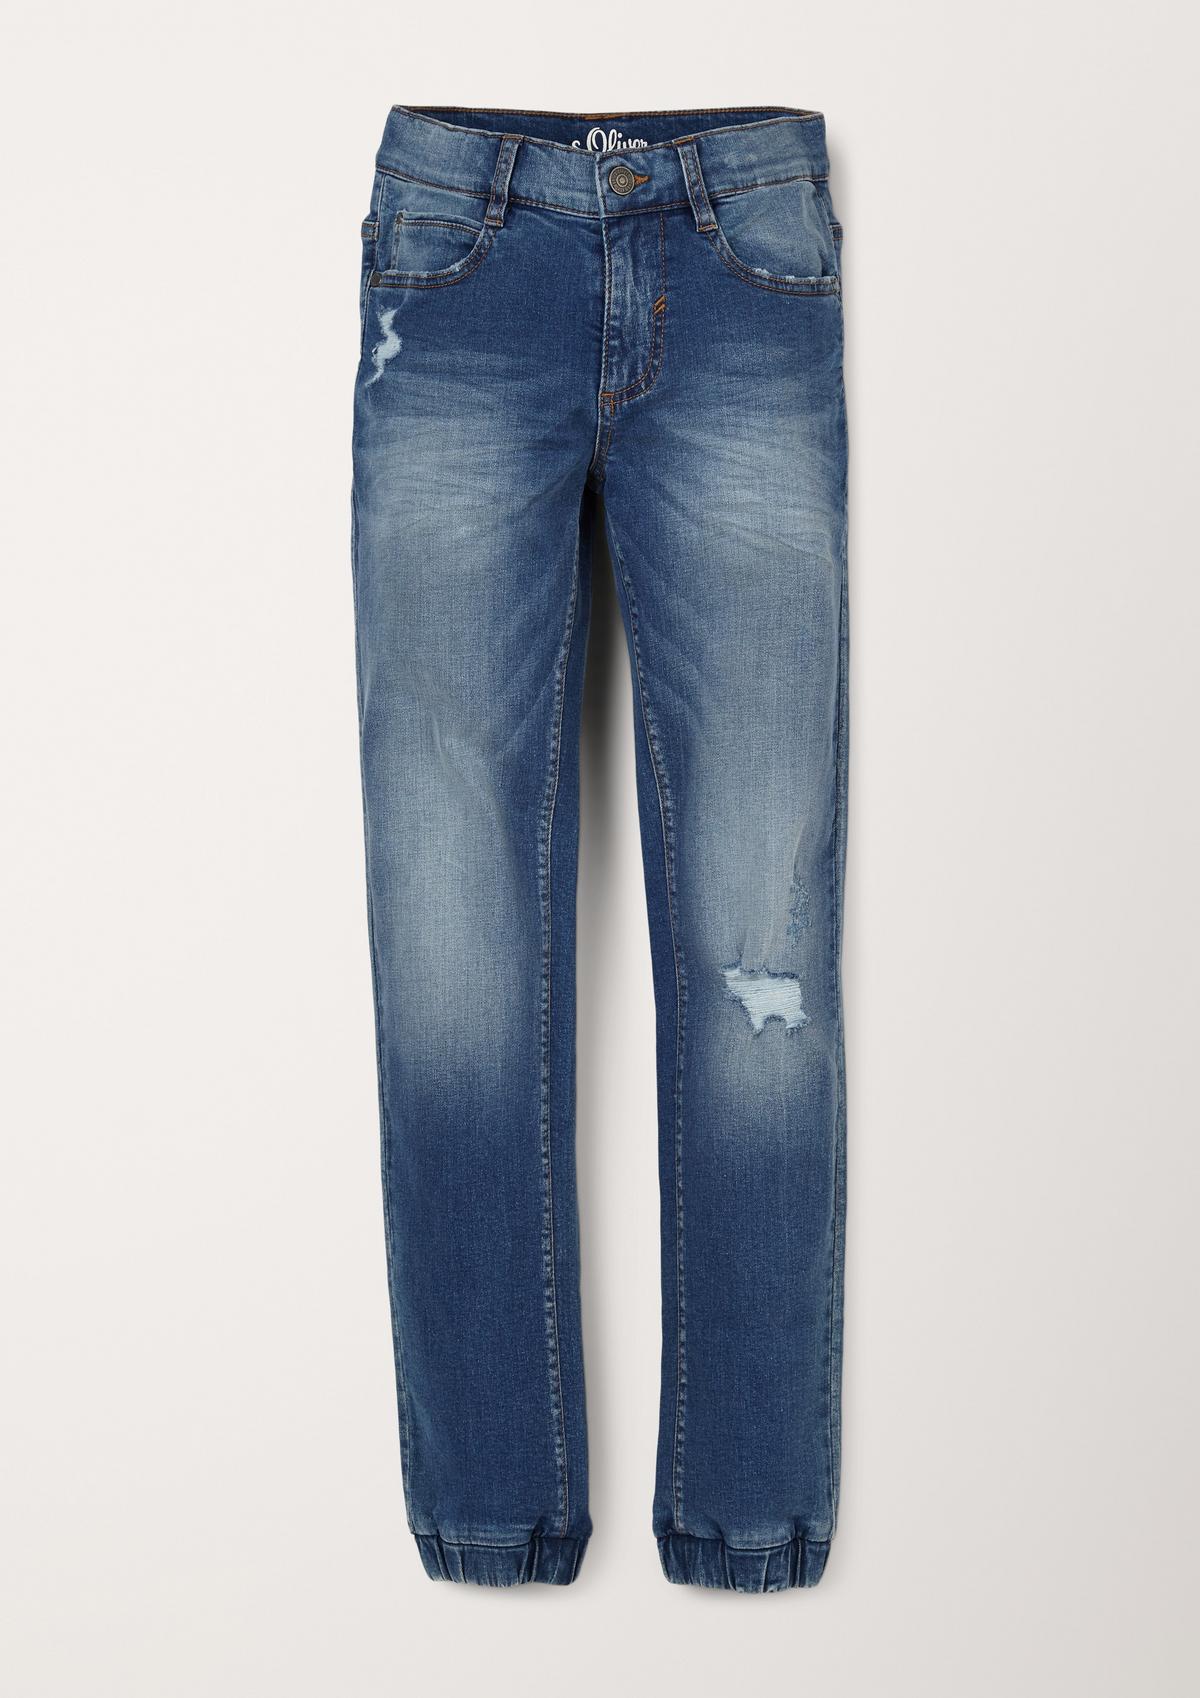 s.Oliver Jeans Seattle / Regular Fit / Mid Rise / Slim Leg